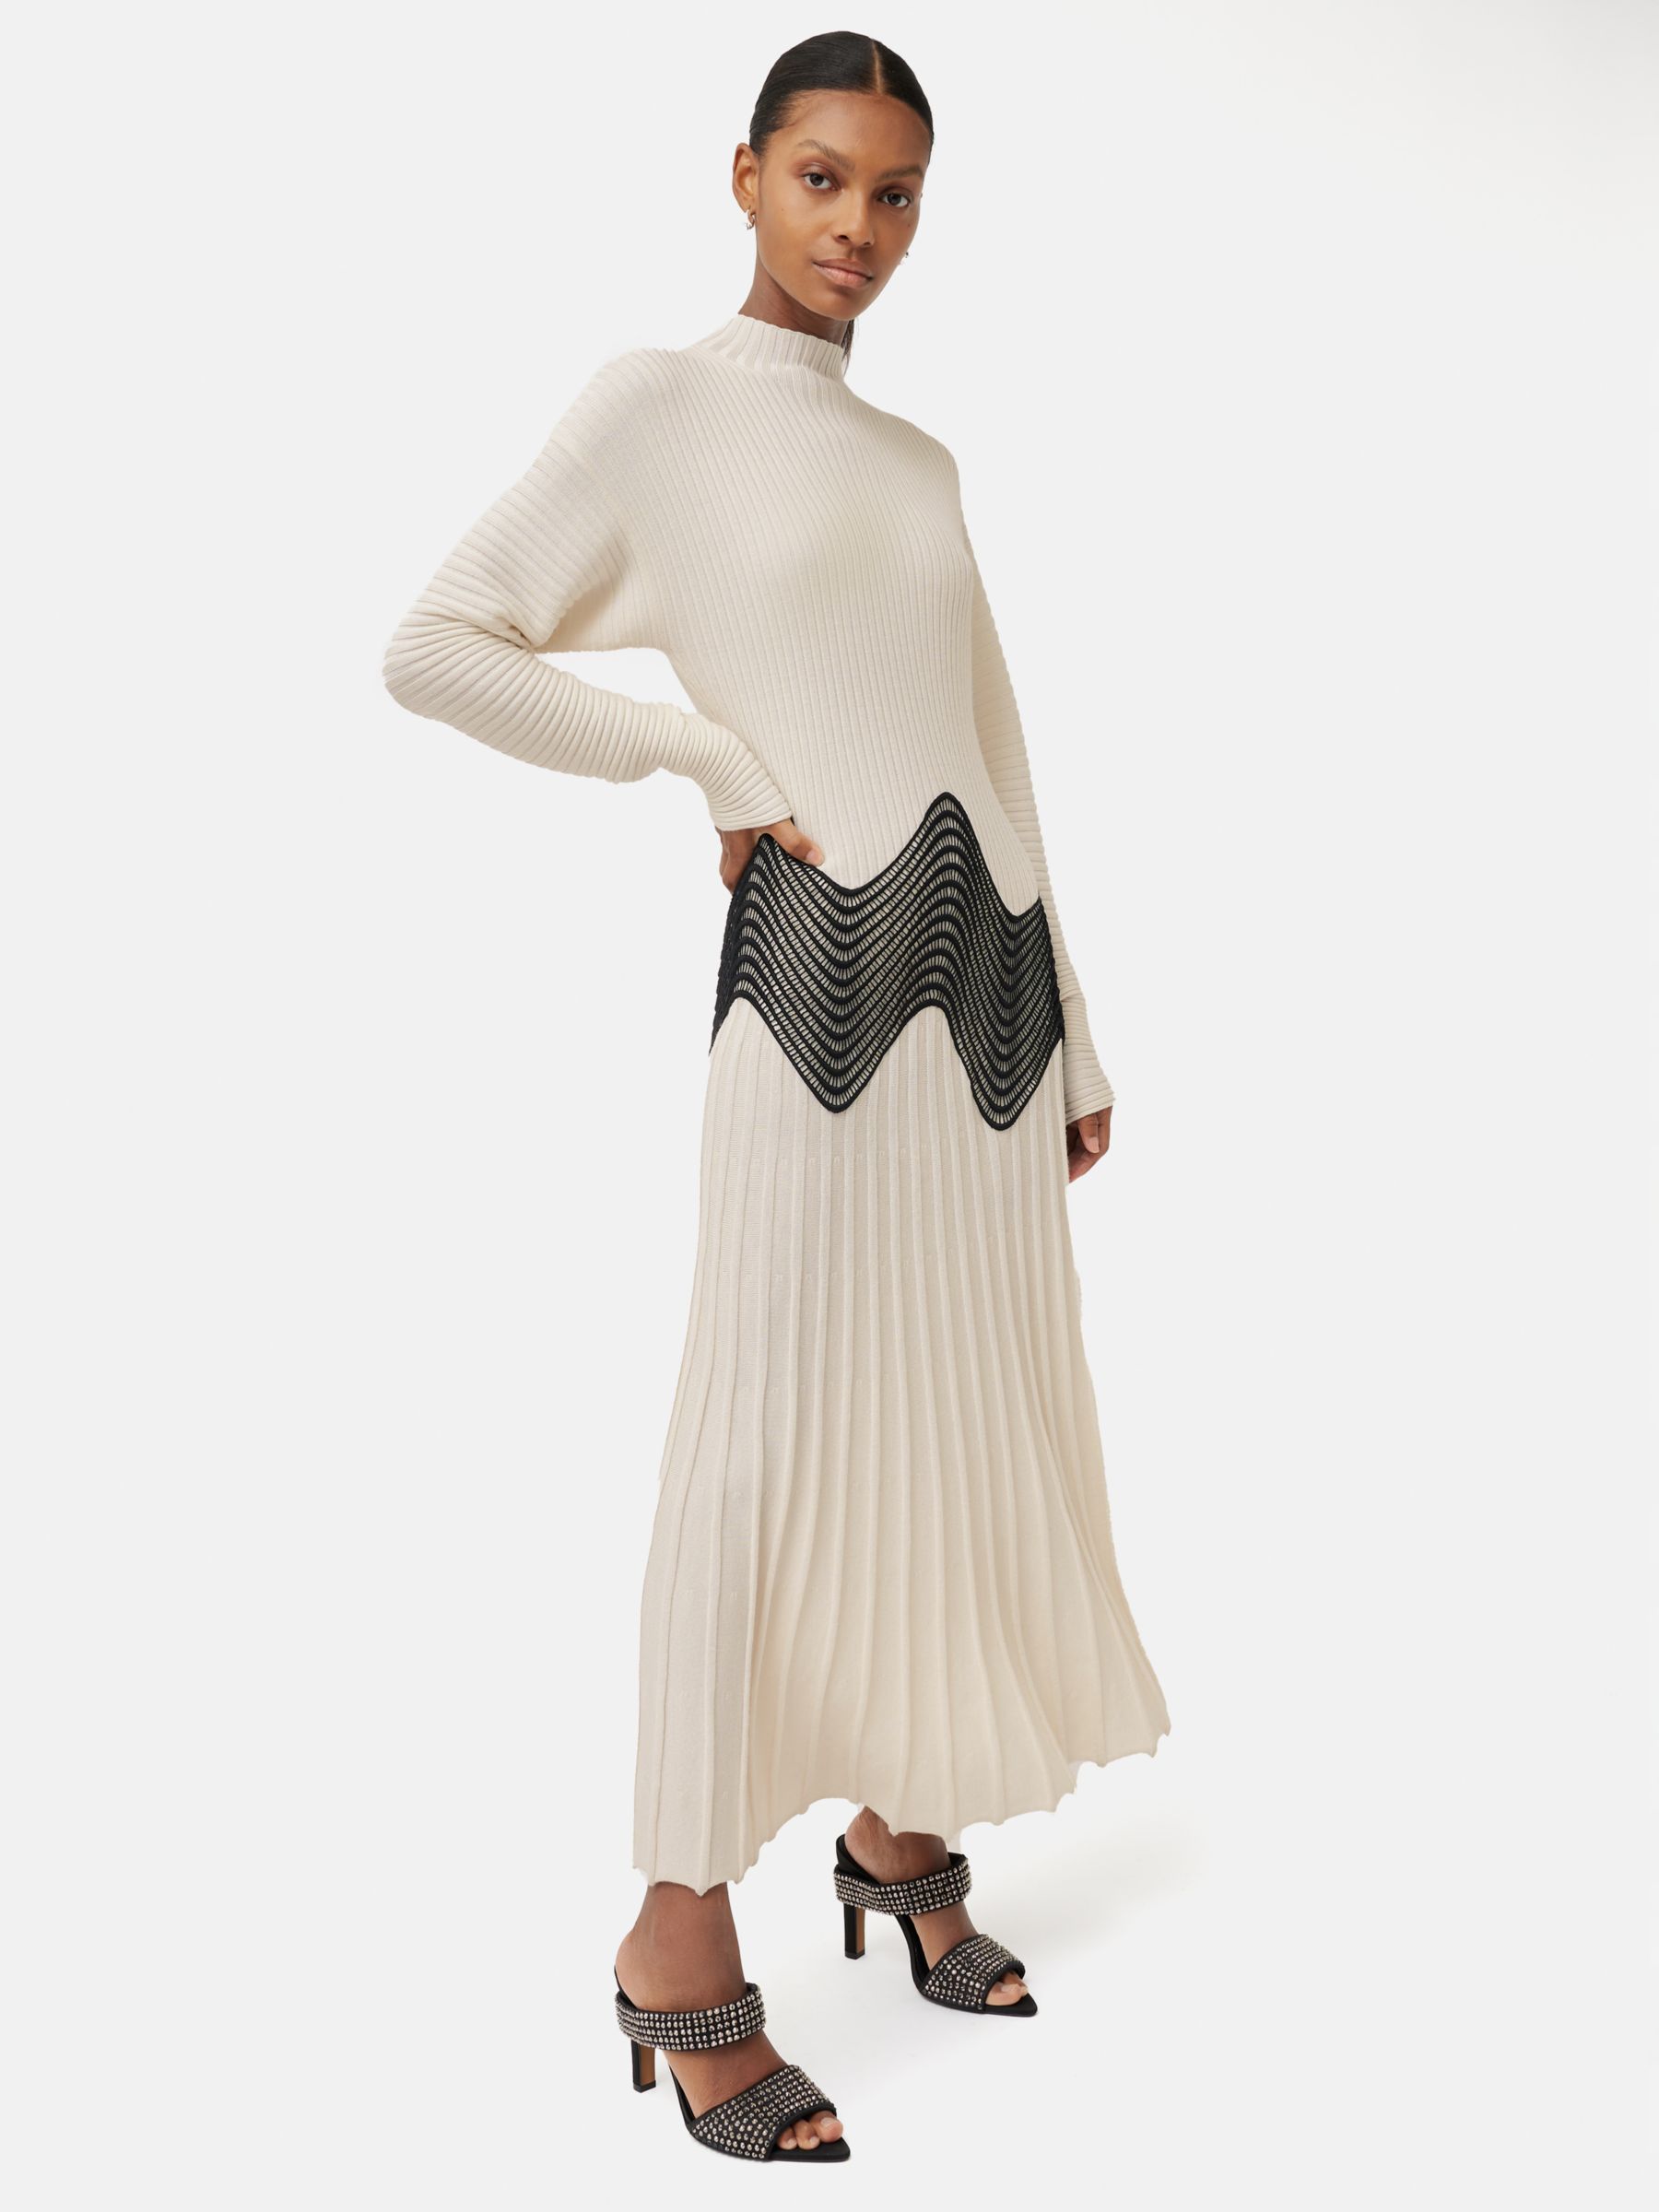 Jigsaw Lace Trim Waist Knitted Dress, Cream/Black, S